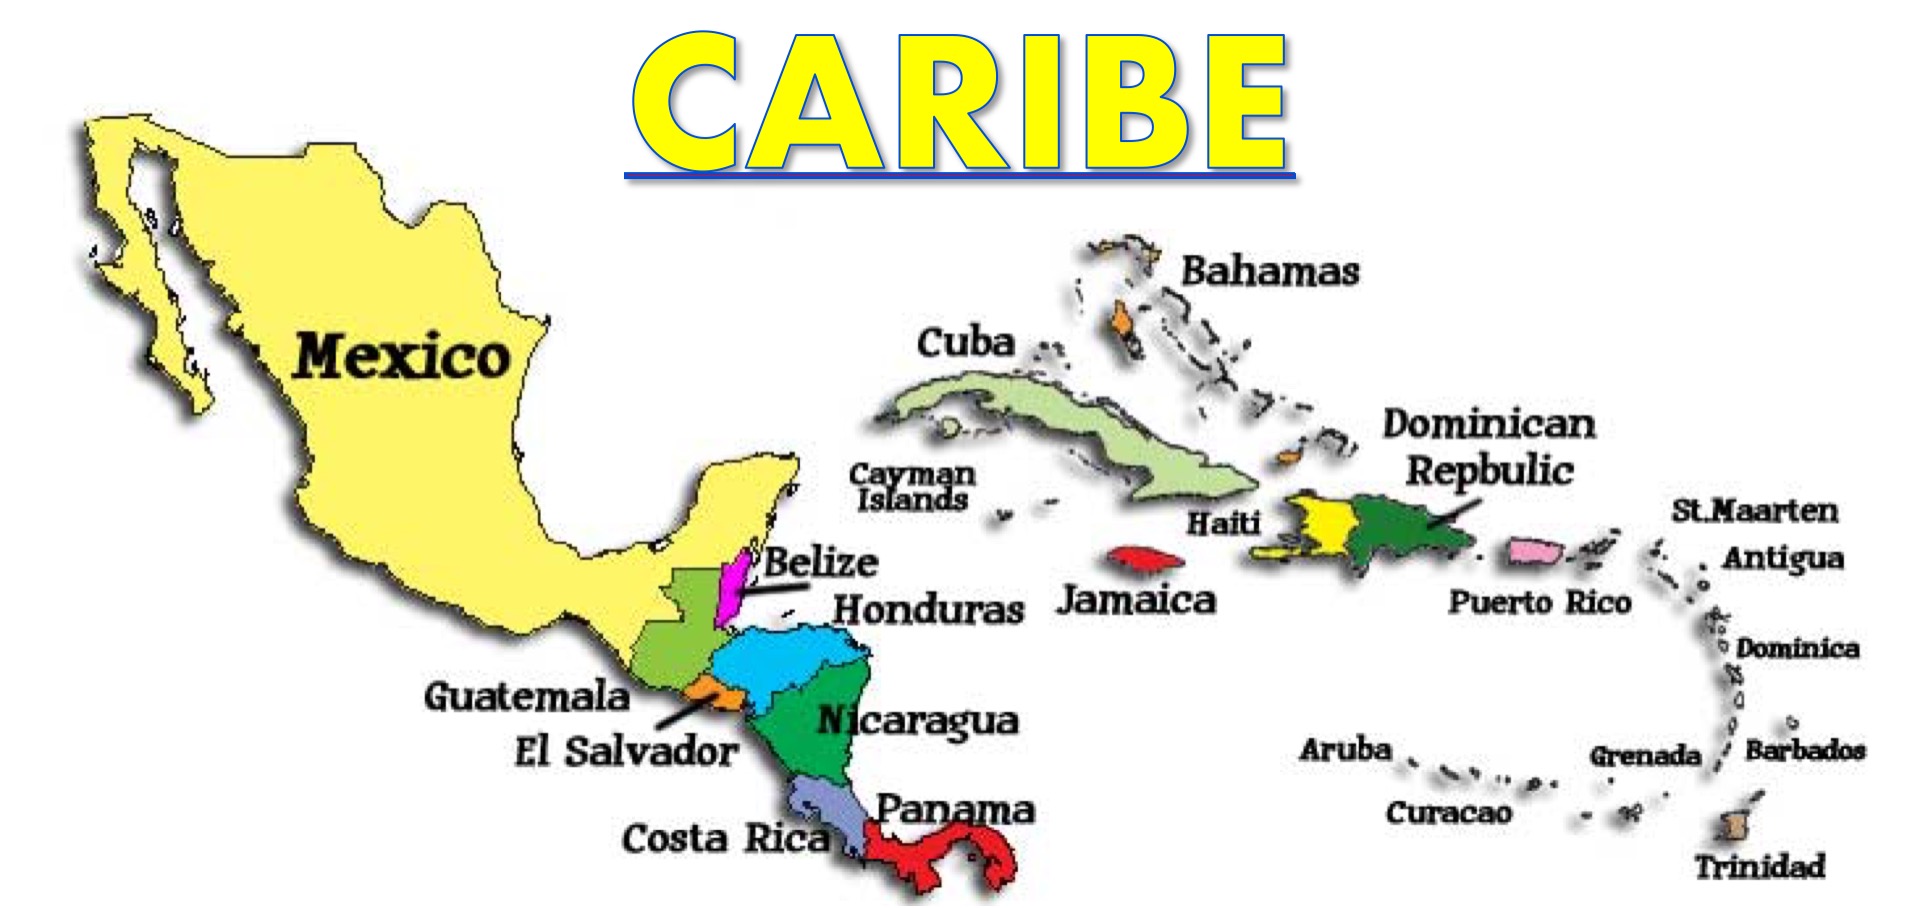 Of the countries of central. Центральная Америка. Карта центральной Америки. Великая Республика центральной Америки. Central America & Caribbean.